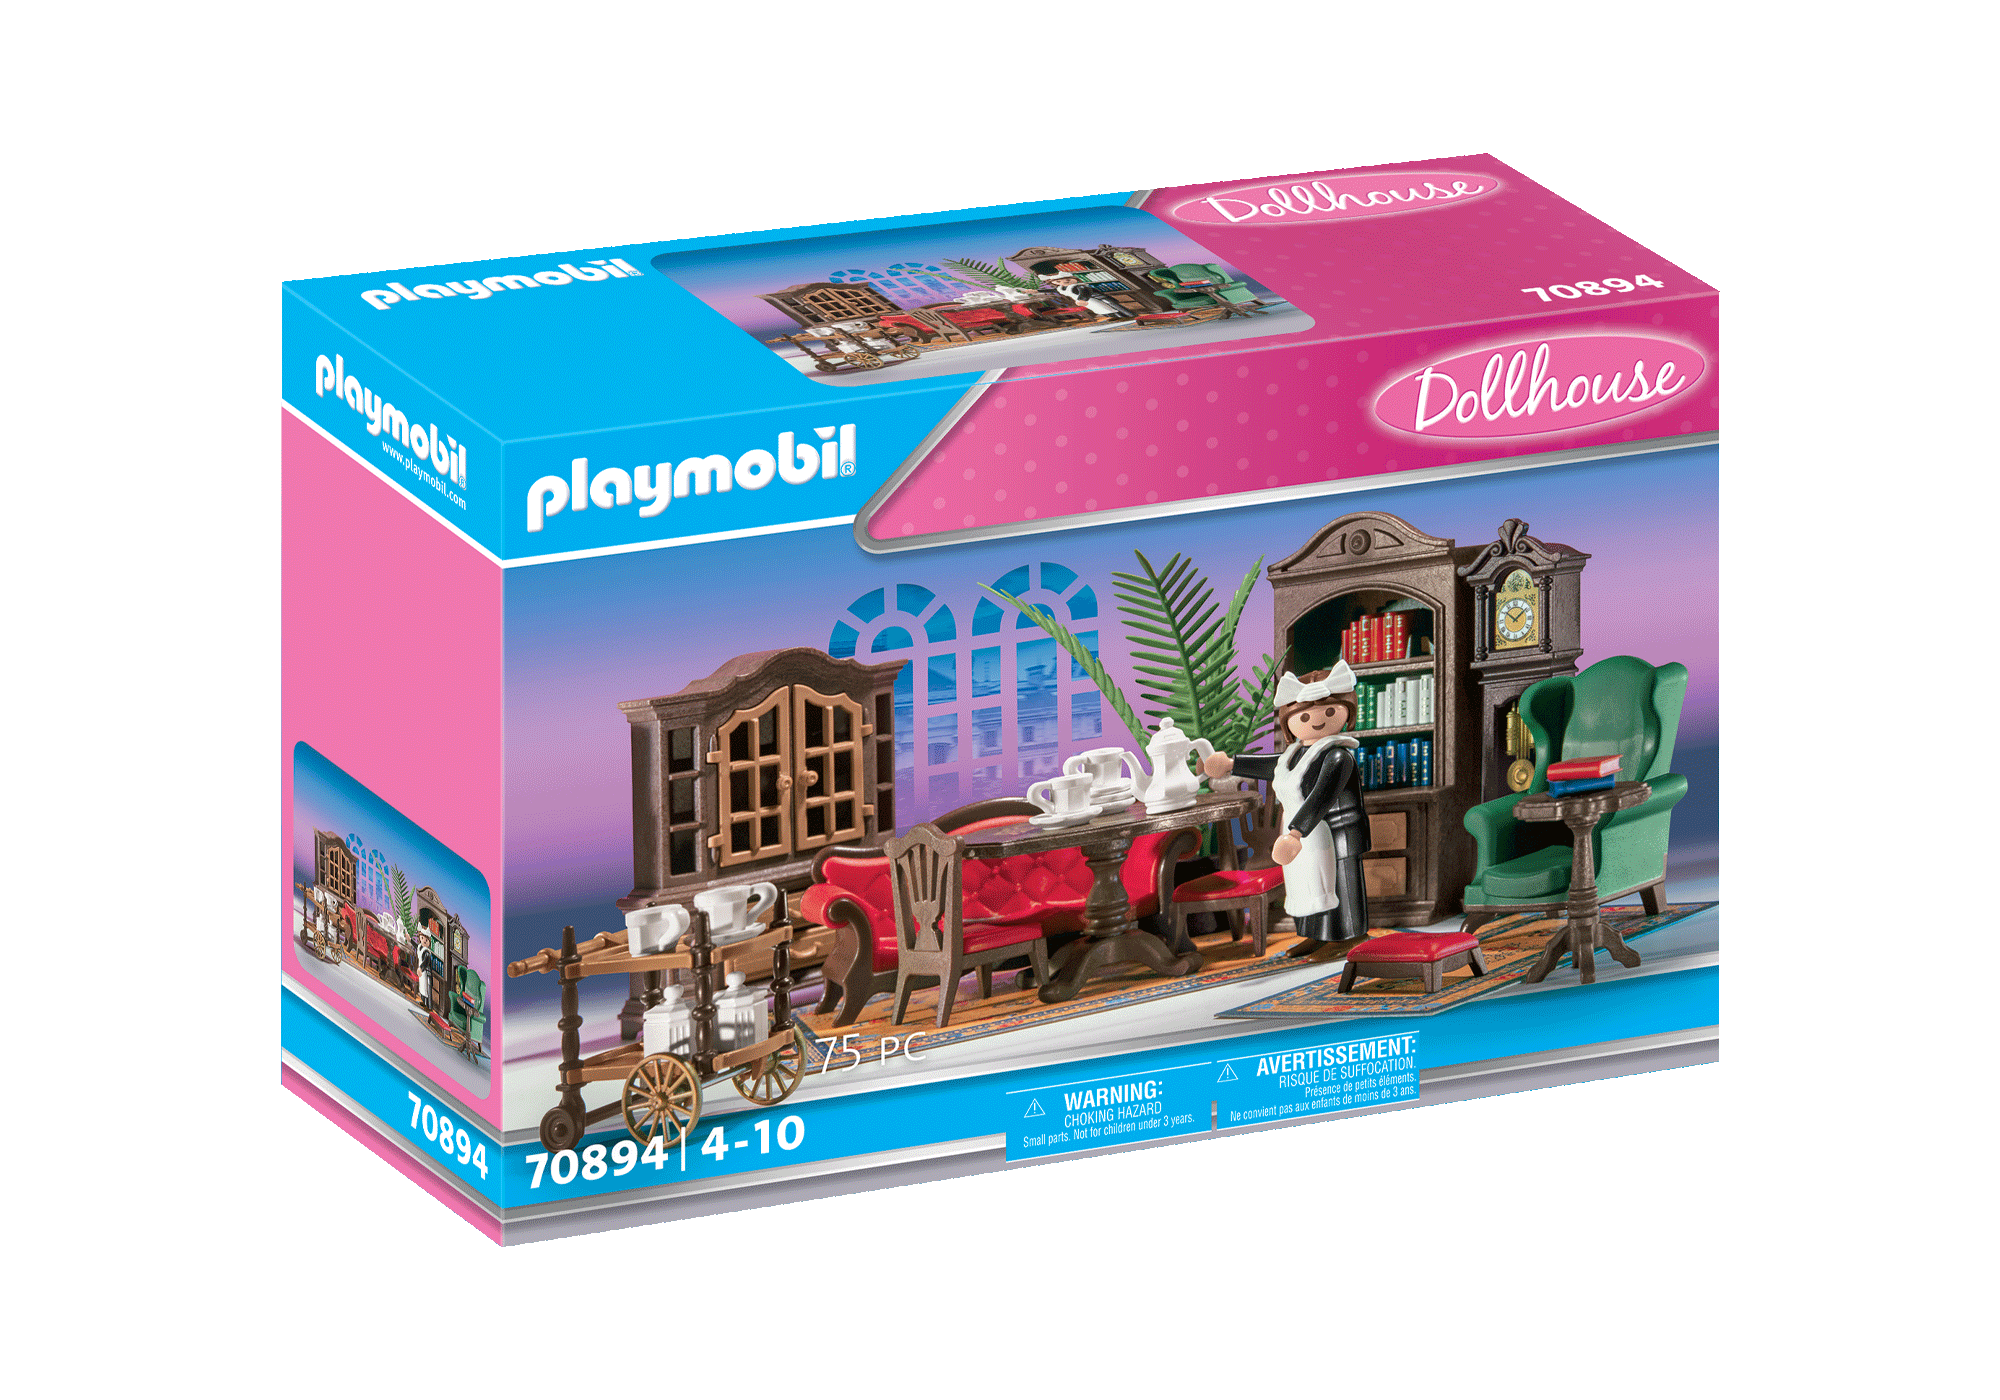 Playmobil Dollhouse Set 70892 Children's Room Dollhouse Mansion